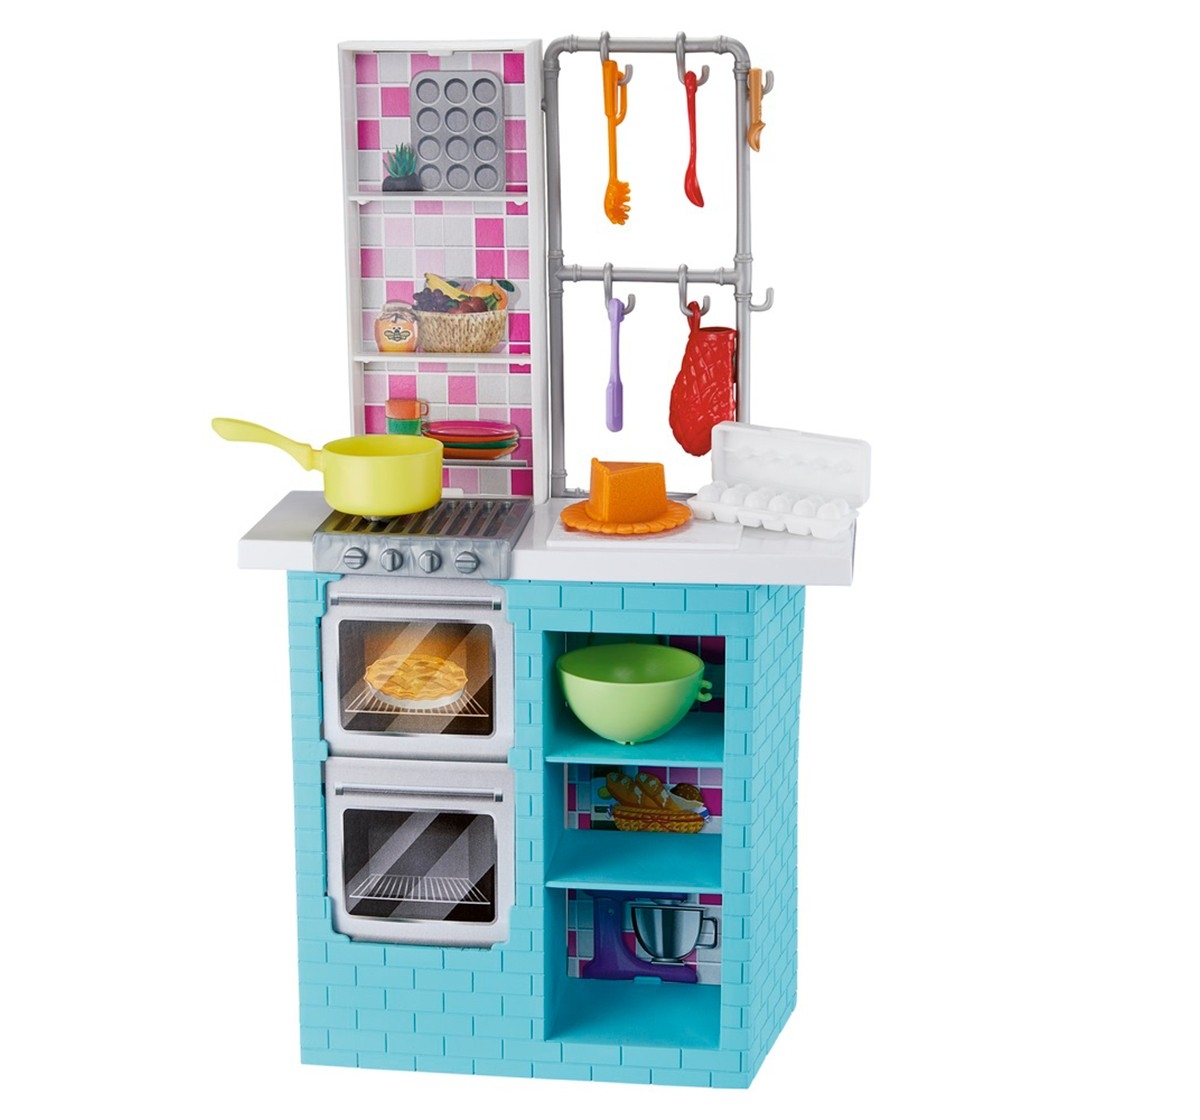 Barbie Kitchen Playset, 3Y+, Multicolour